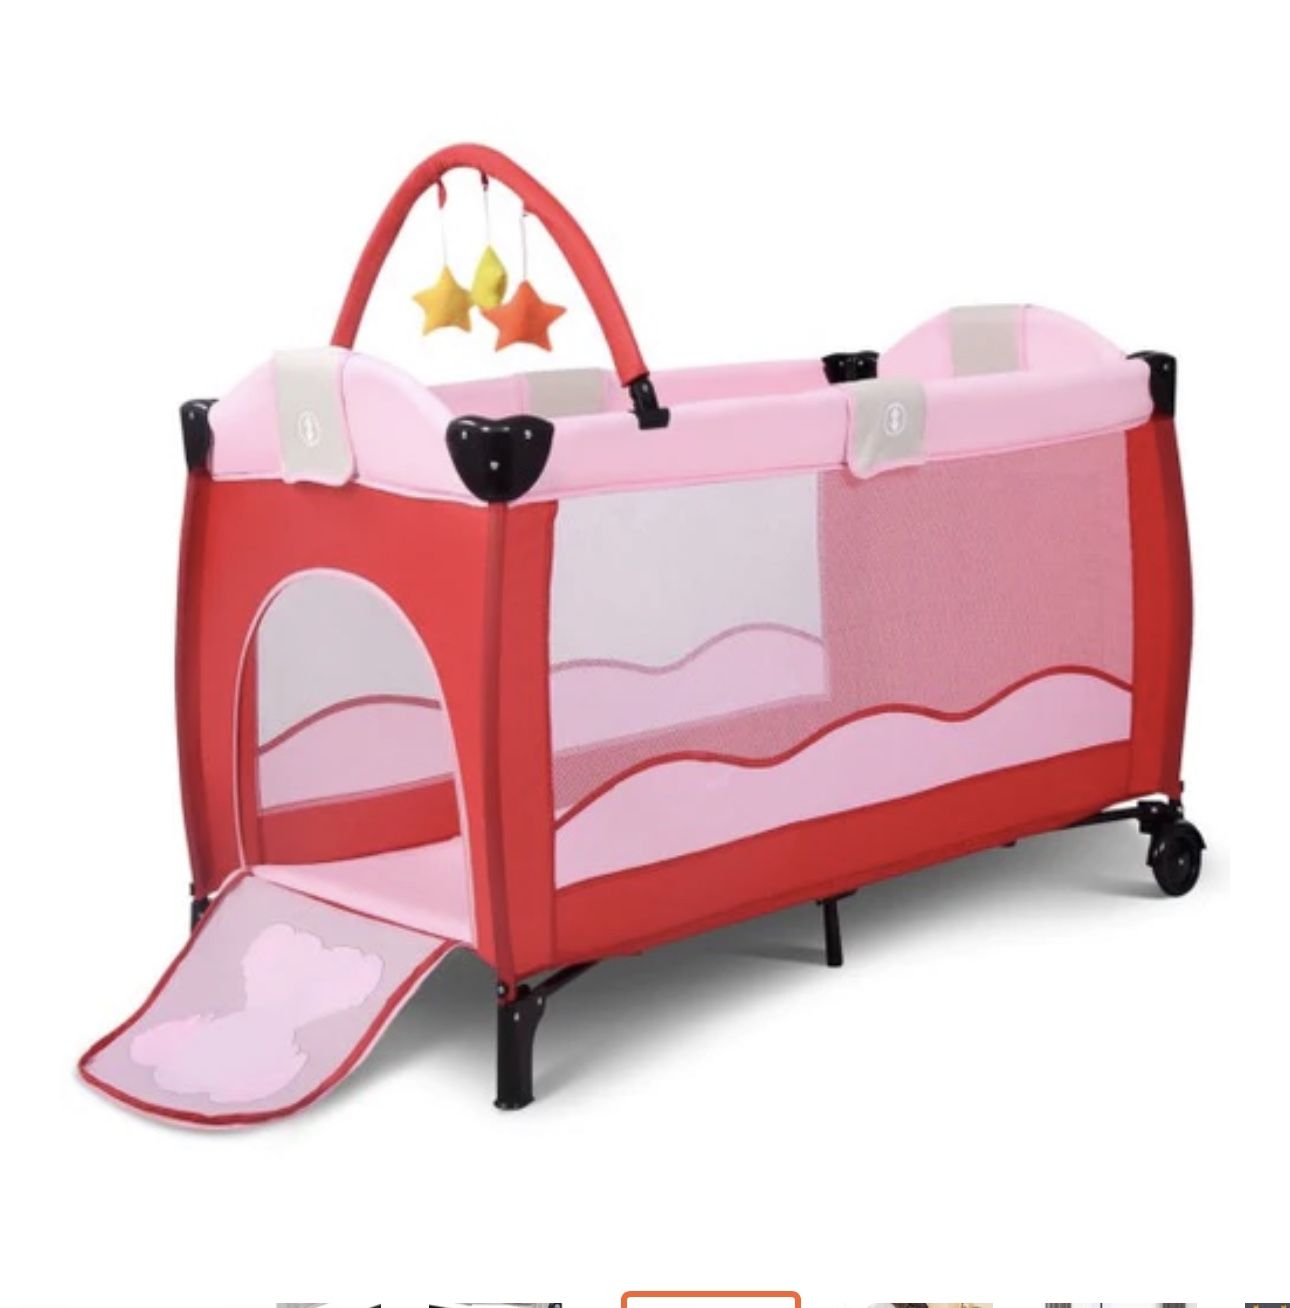 Portable Crib/Playpen